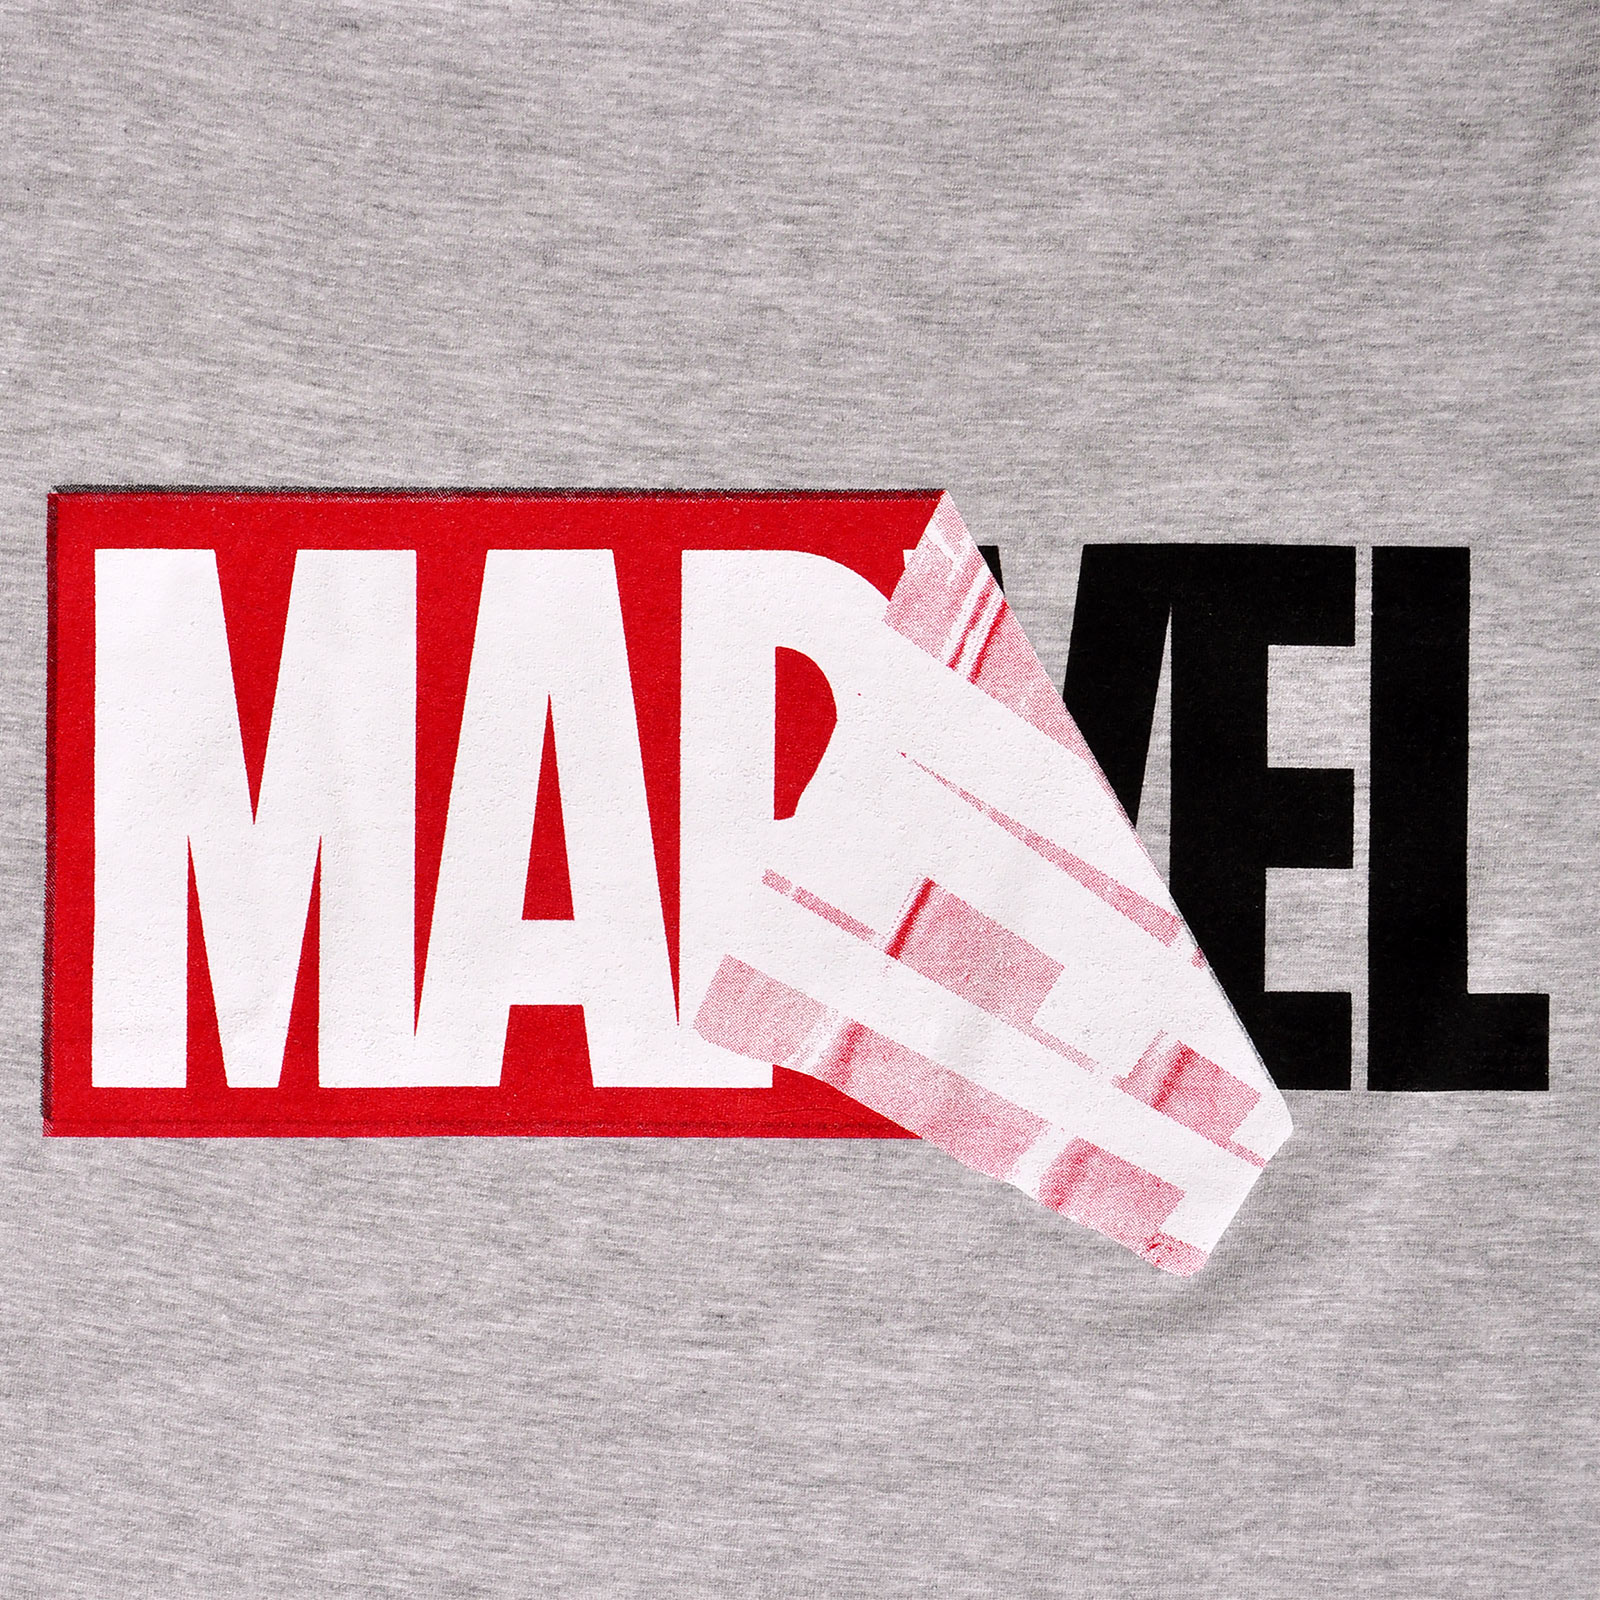 Marvel - Logo Reveal T-Shirt grijs